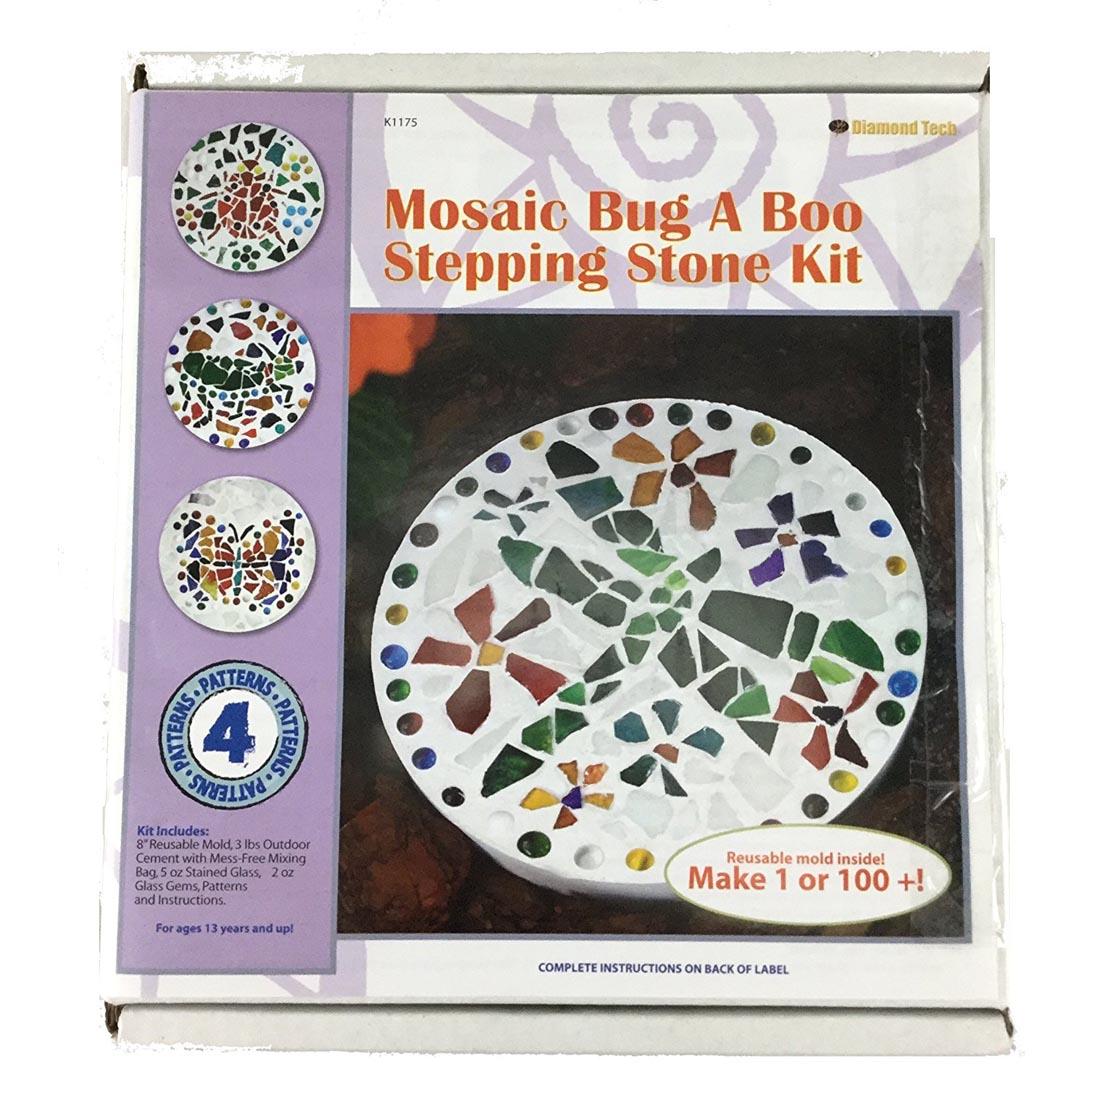 Mosaic Bug A Boo Stepping Stone Kit